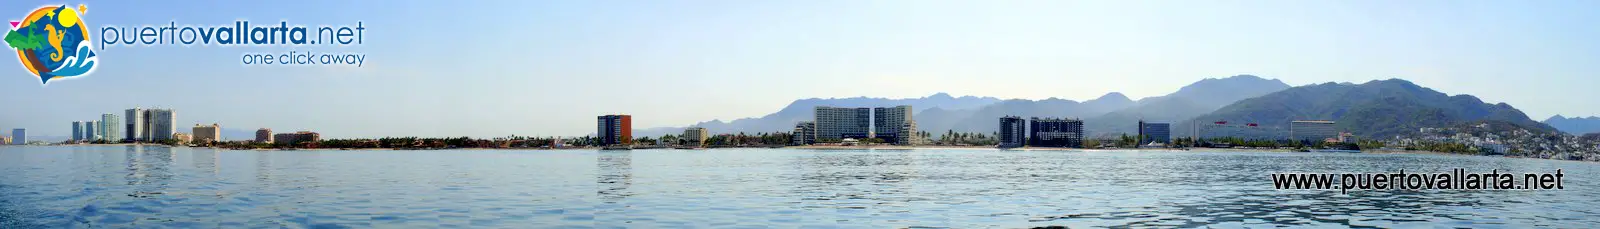 Puerto Vallarta Hotel Zone as seen from the bay